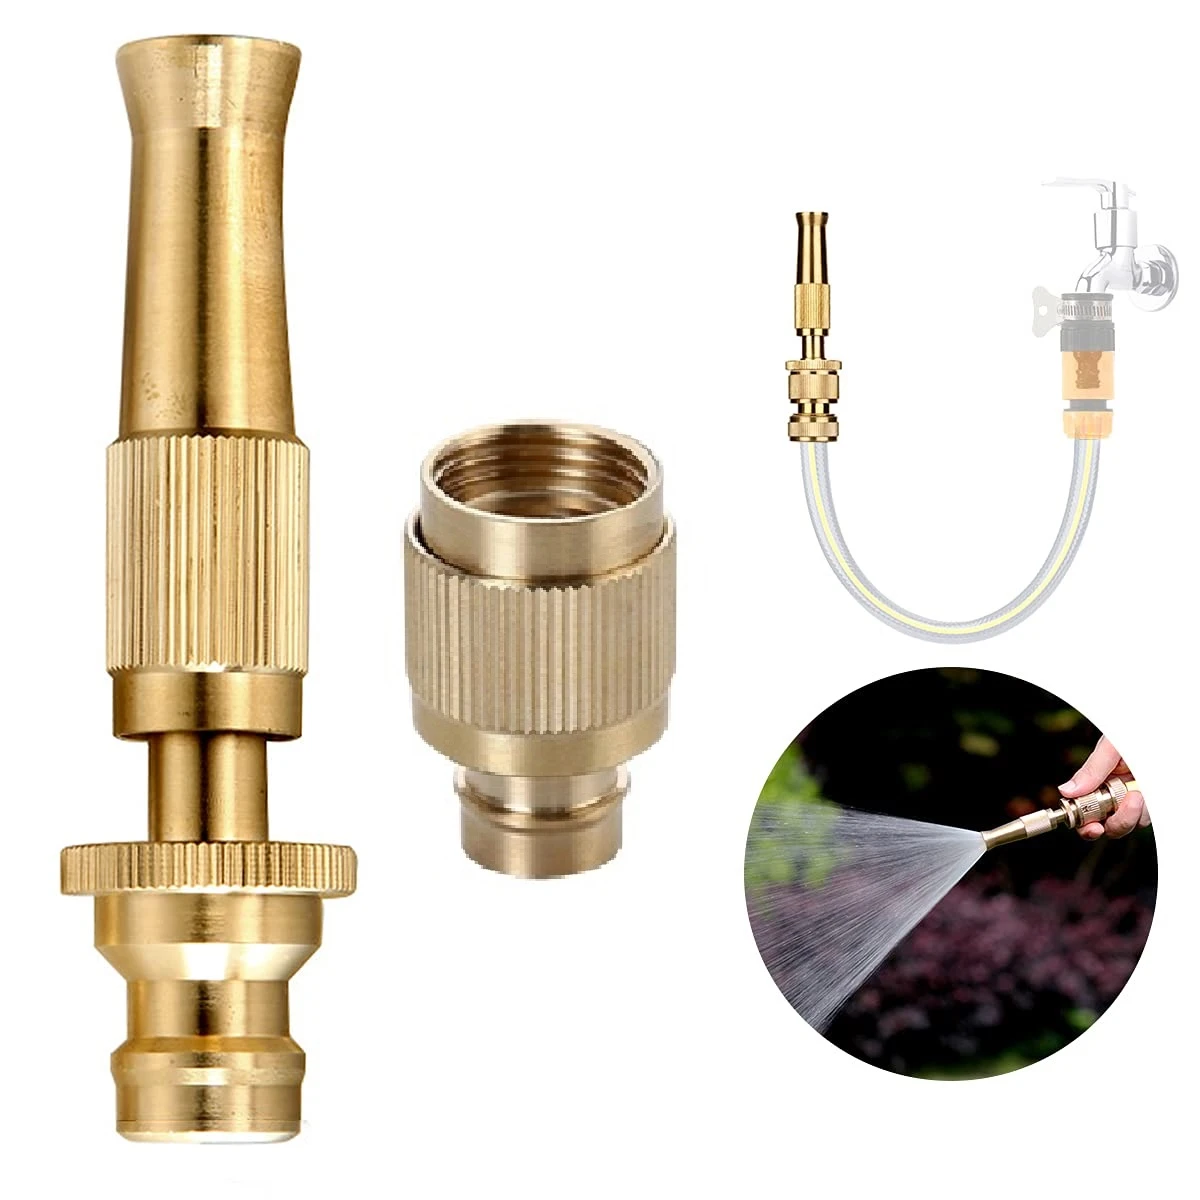 Copper Brass Nozzle Water Spray Gun